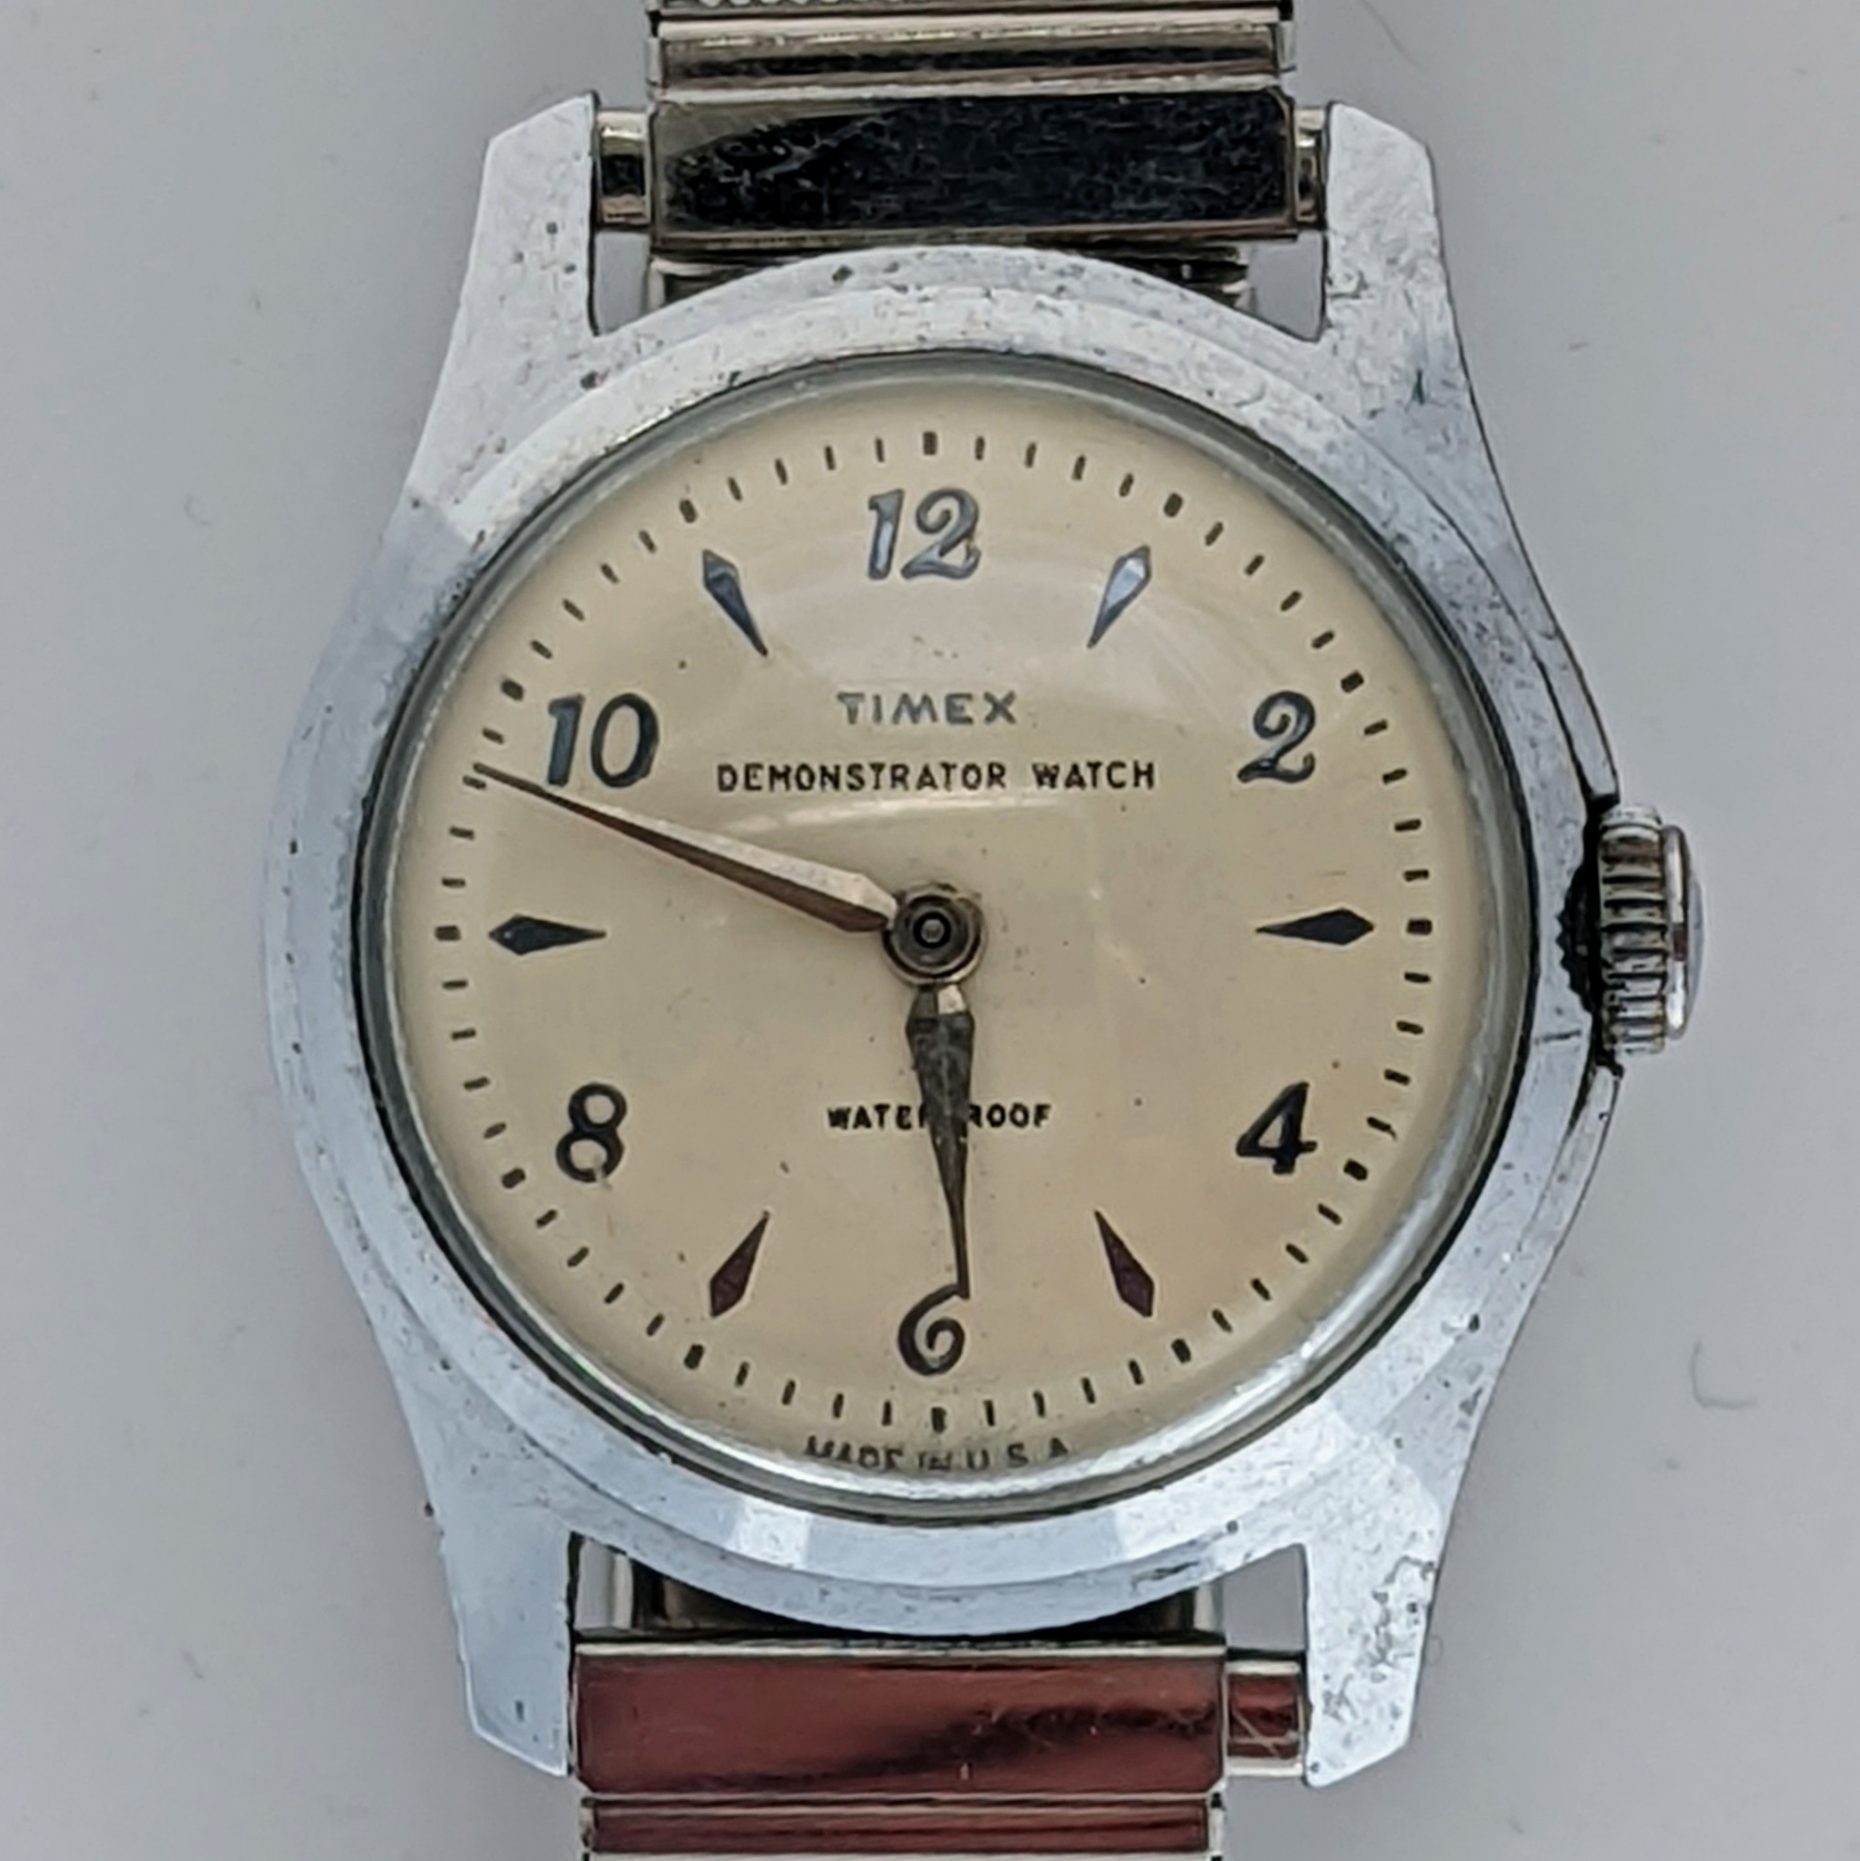 Timex Marlin 2014-2257 [1957] Demonstrator